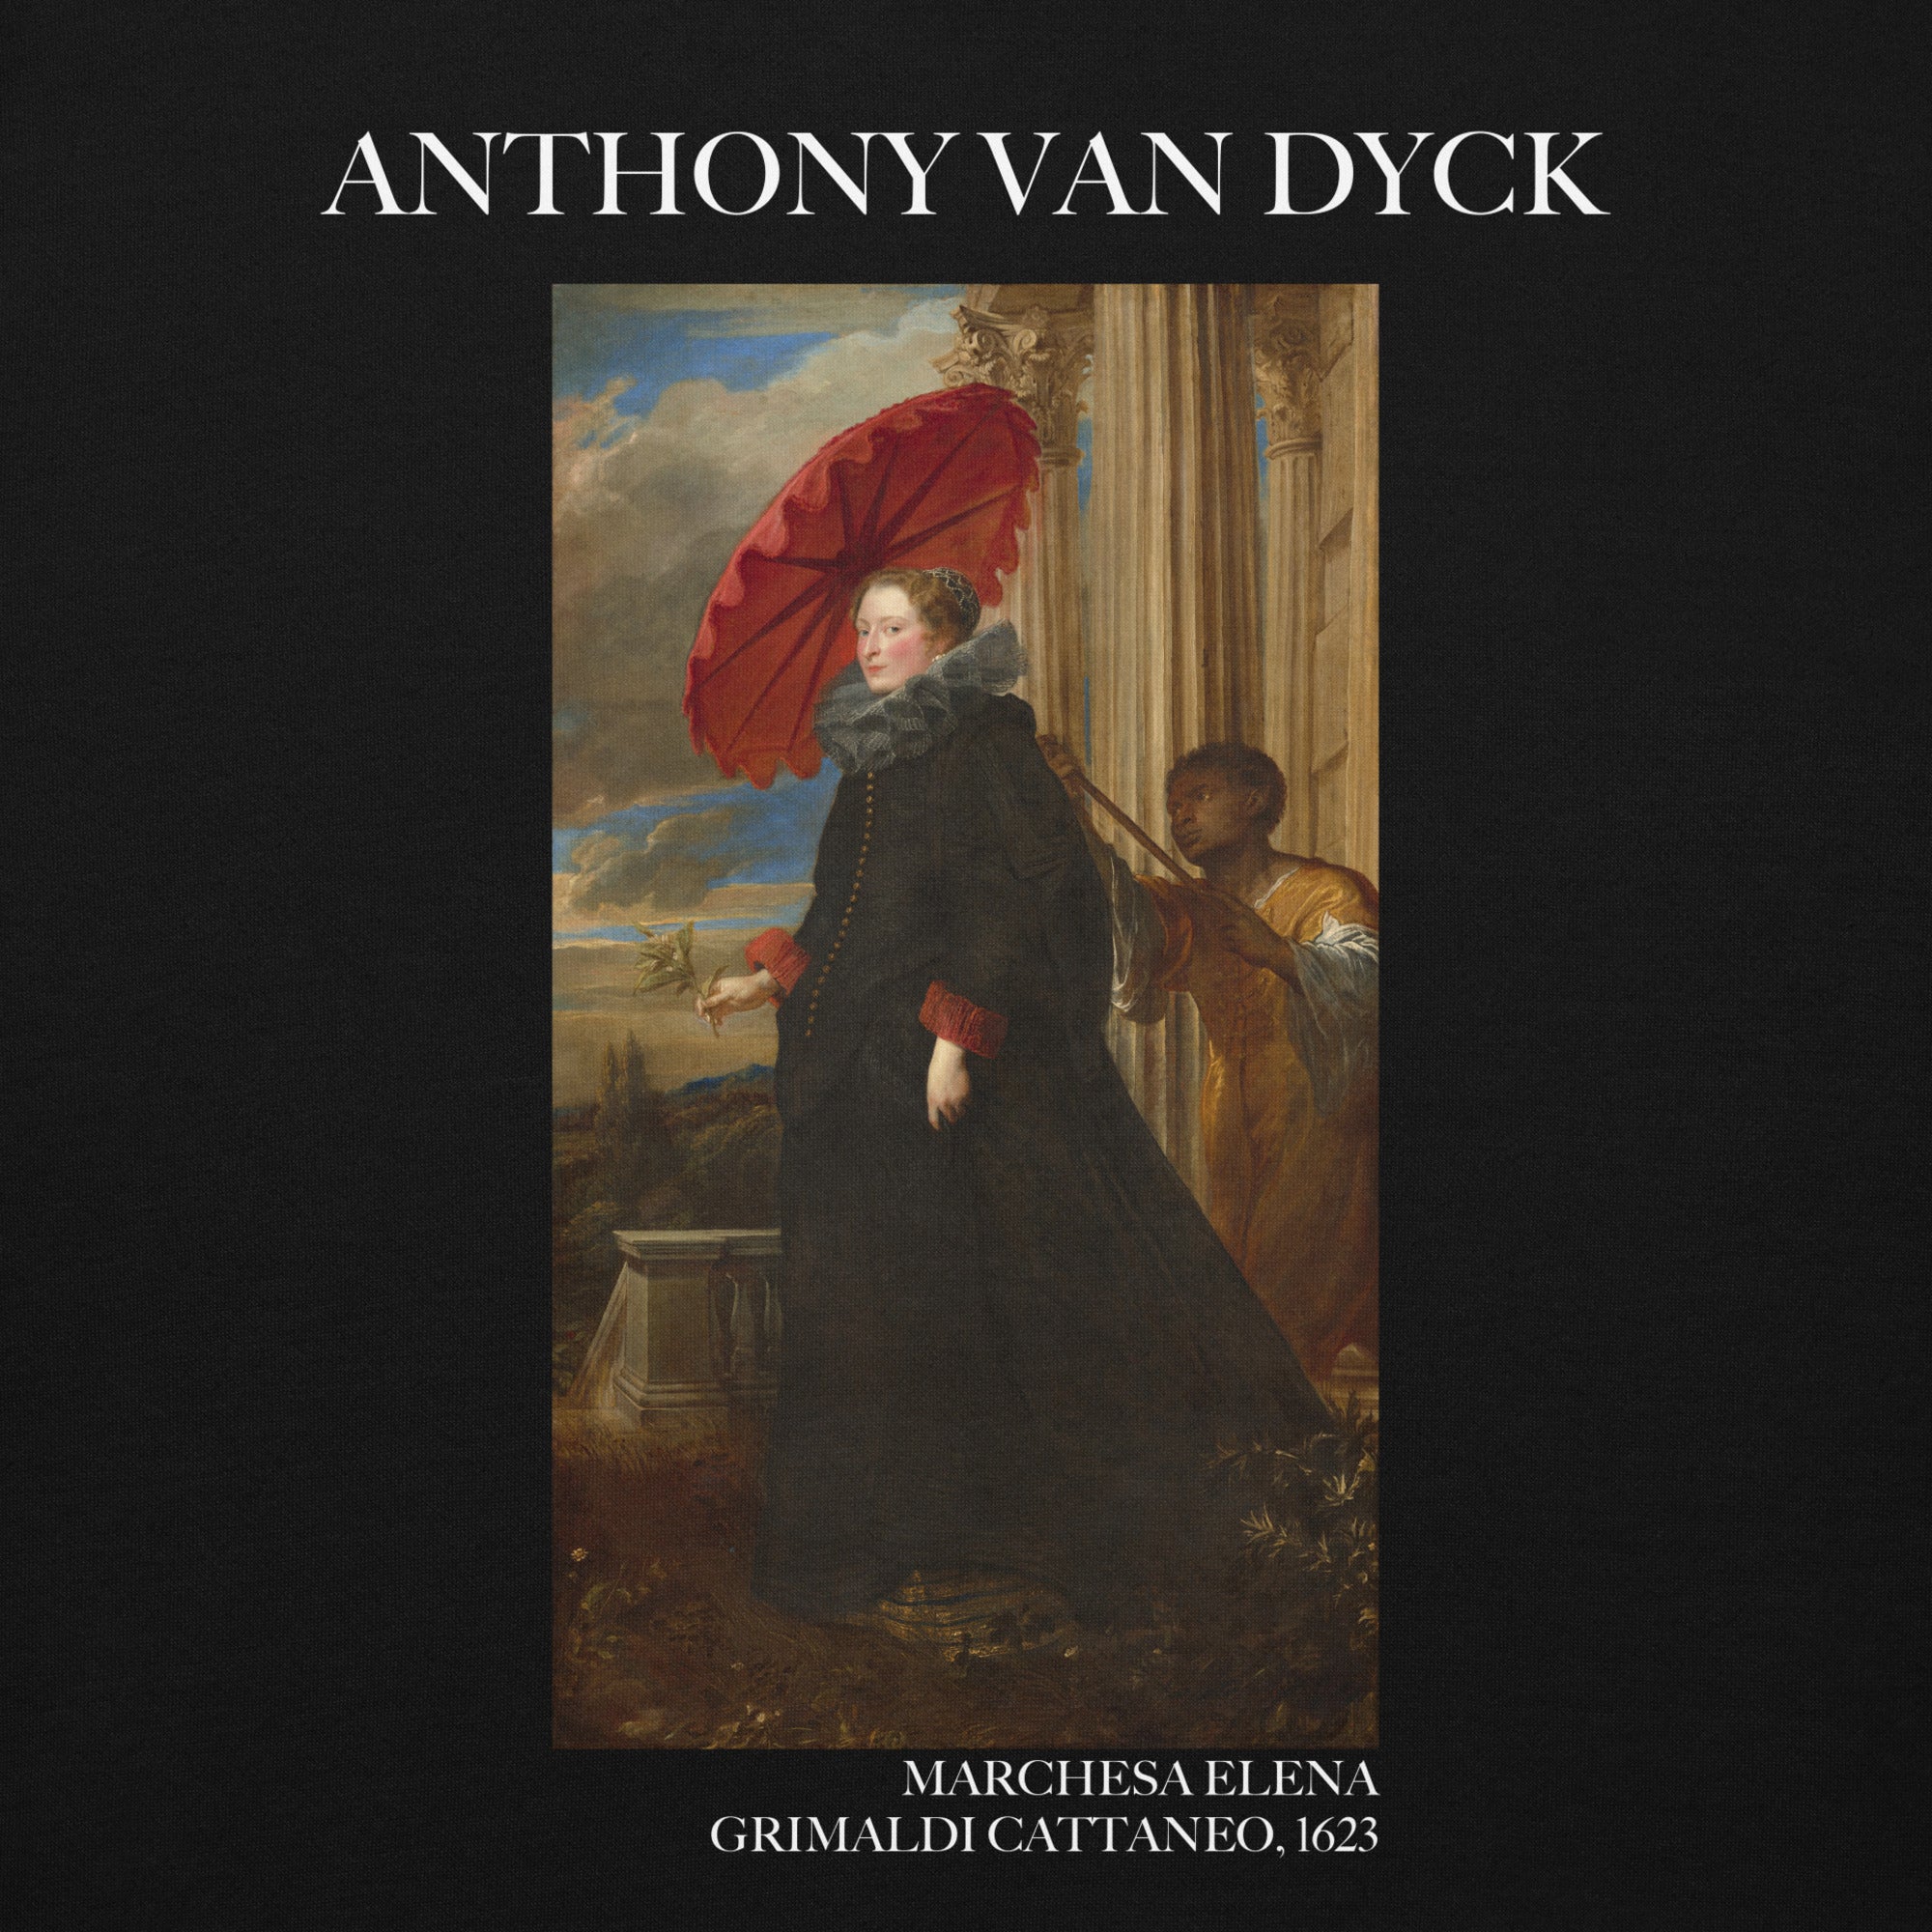 Sir Anthony van Dyck 'Marchesa Elena Grimaldi Cattaneo' Famous Painting Hoodie | Unisex Premium Art Hoodie